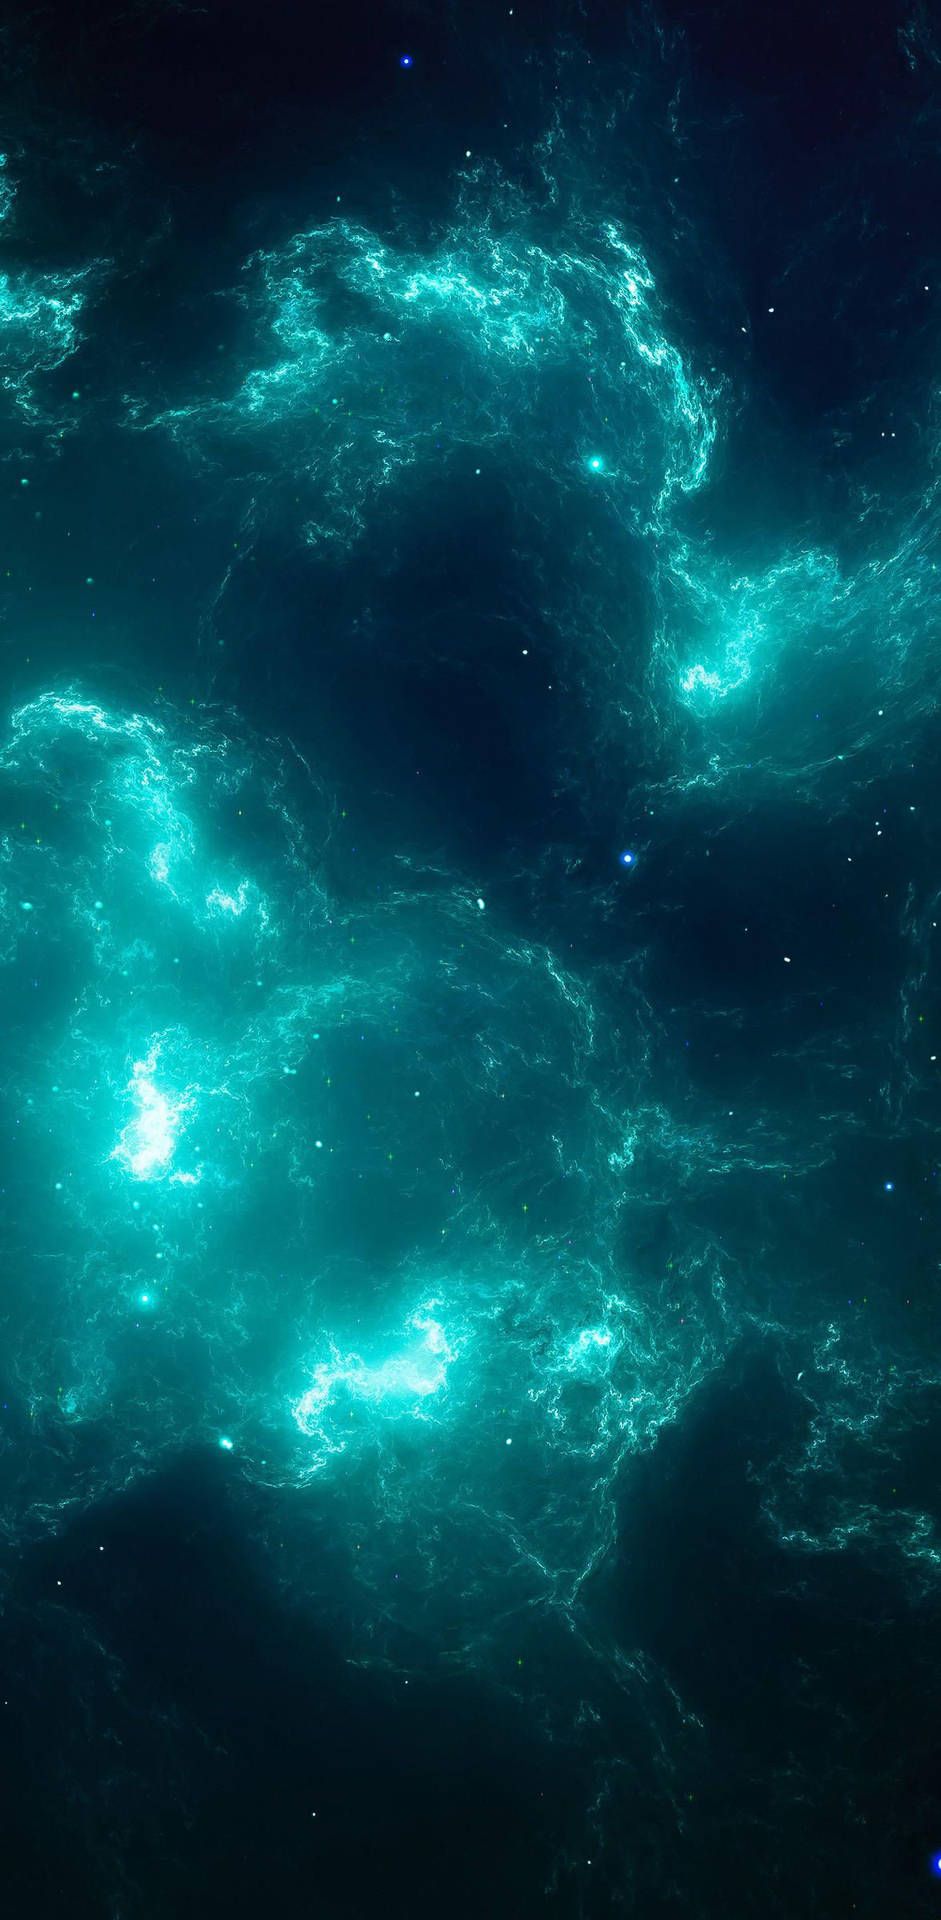 1440x2560 wallpaper of a blue nebula - Blue